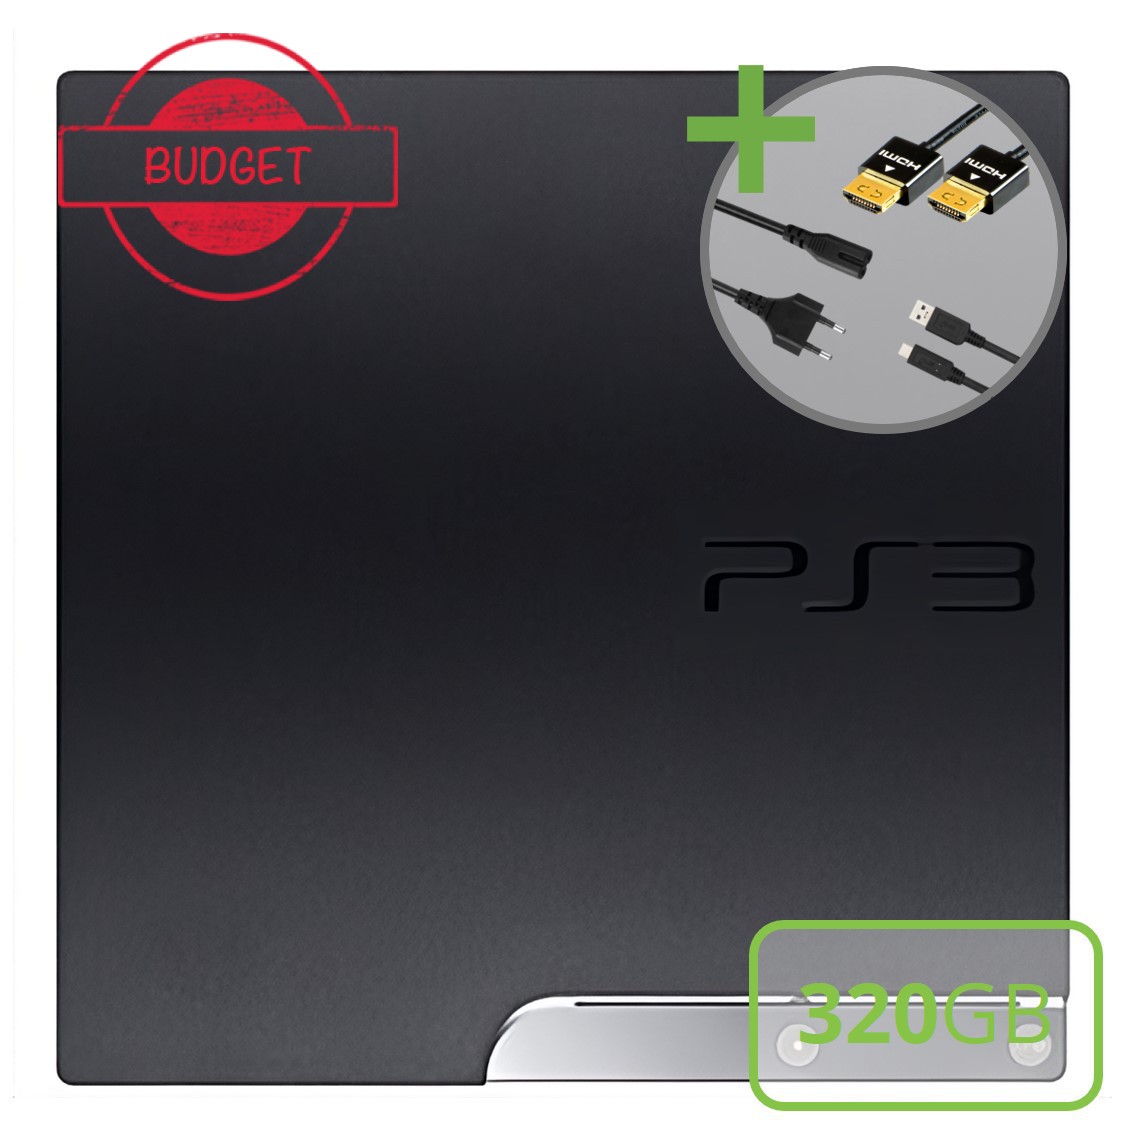 Sony PlayStation 3 Slim (320GB) Starter Pack - DualShock Edition - Budget - Playstation 3 Hardware - 3